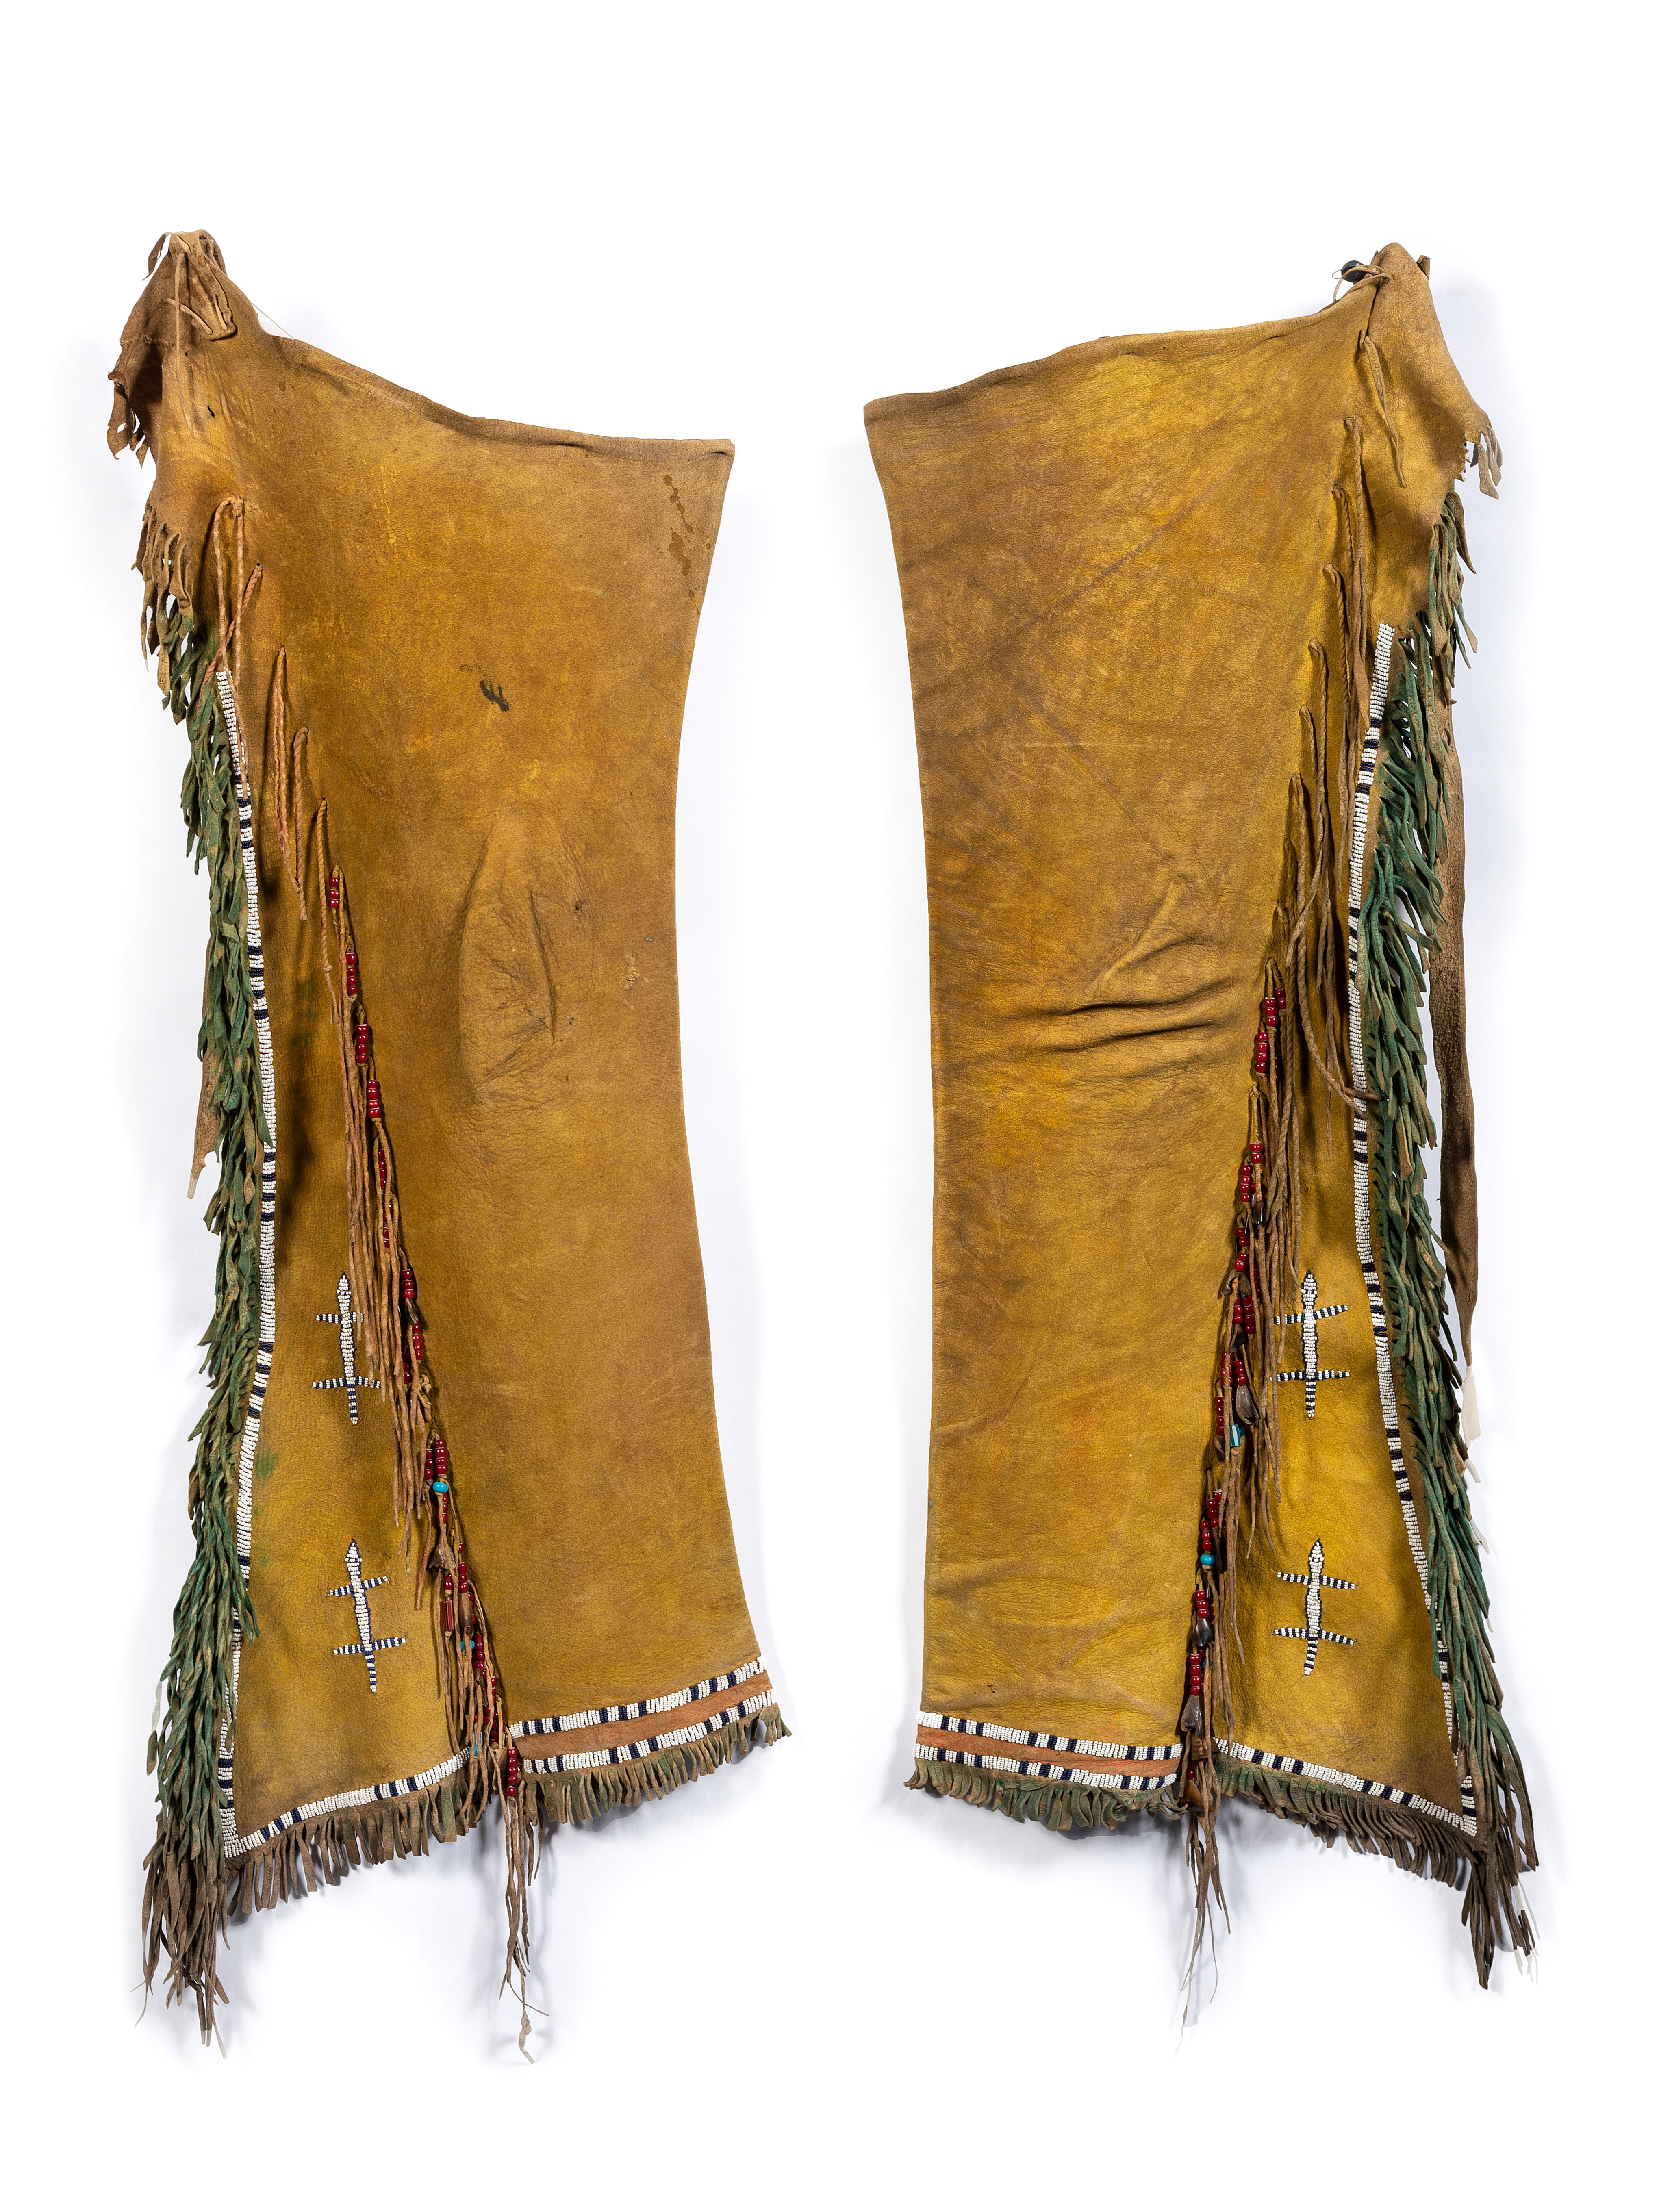 Cheyenne beaded hide leggings from the Joseph Henry Sharp collection, $6,000-$8,000